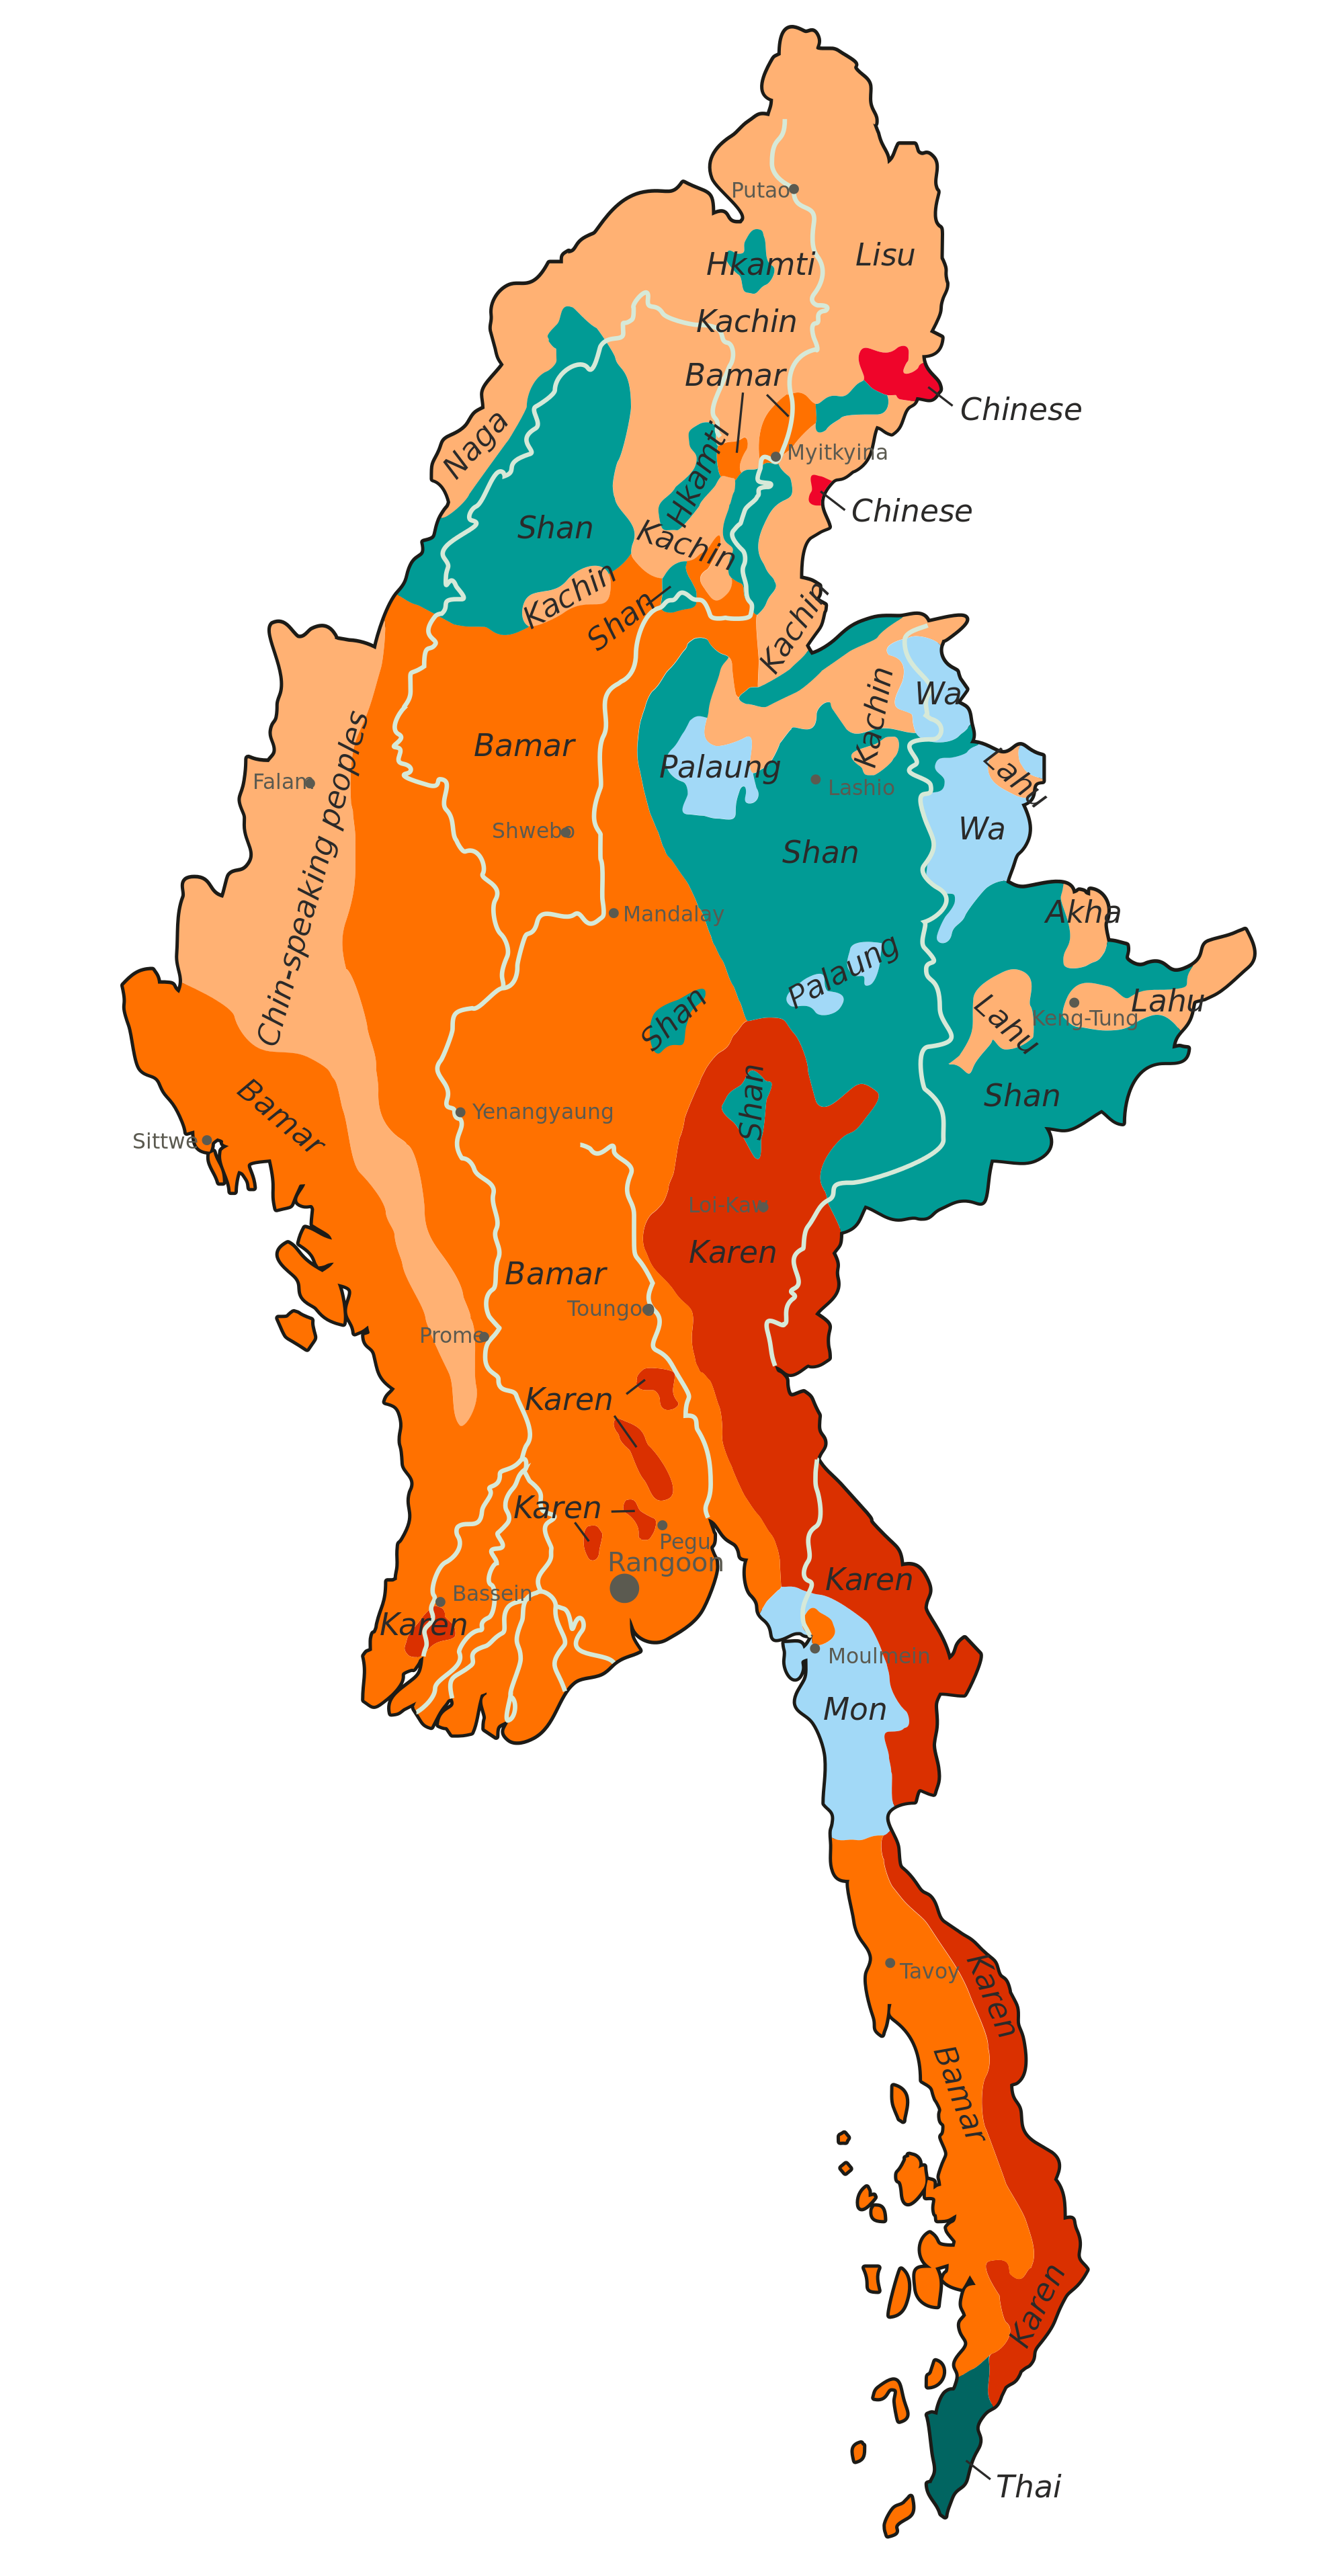 List of ethnic groups in Burma - Wikipedia, the free encyclopedia